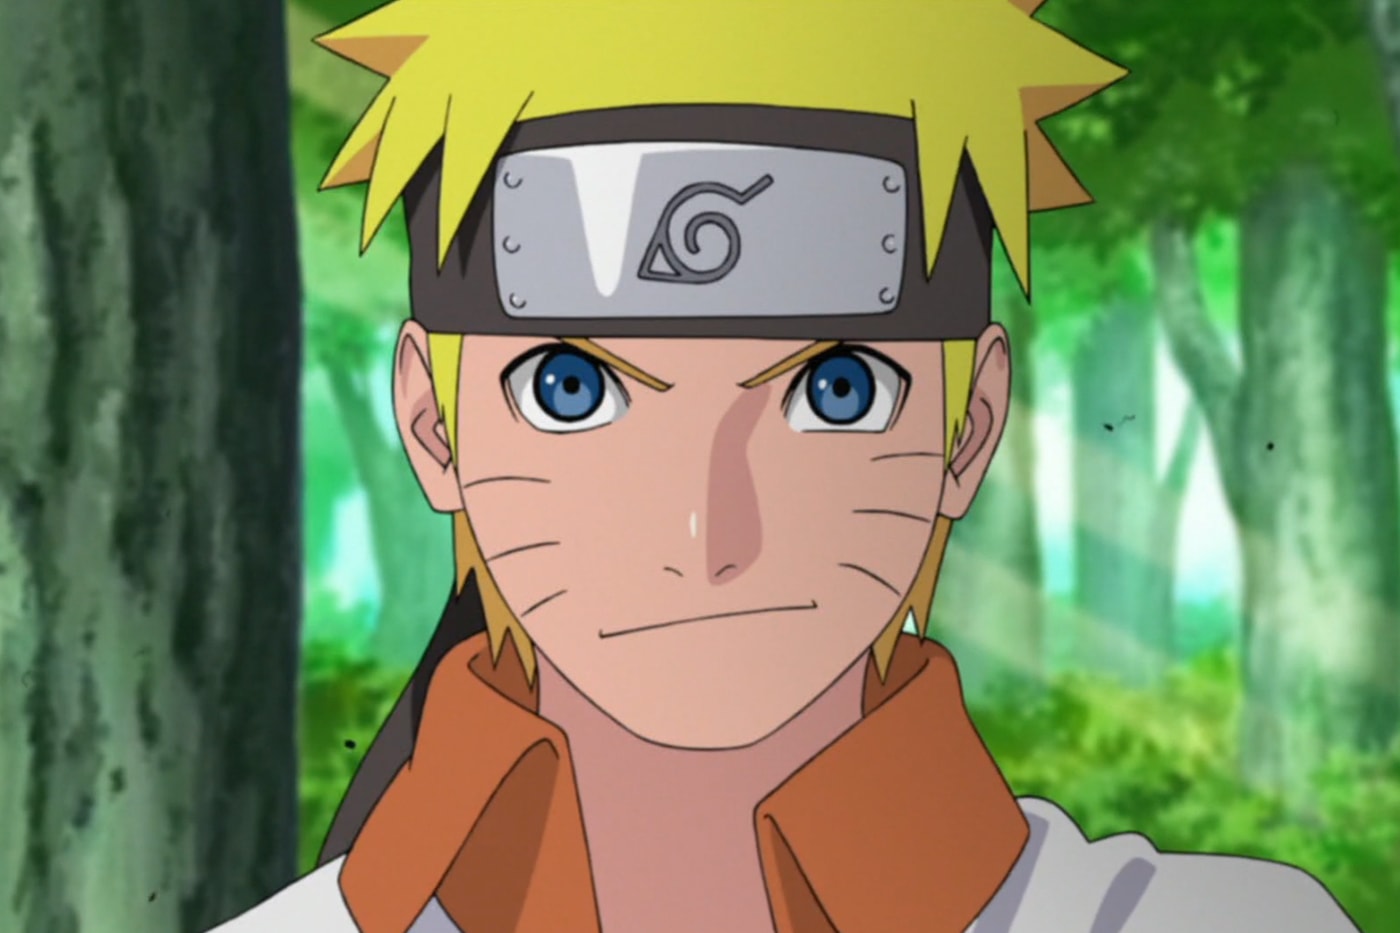 Naruto Comes to 'Fortnite' Next Weeknaruto shippuden fortnite epic games anime franchise crossover skins items emotes tracks Hidden Leaf Village Creative Hub release date november 16 news